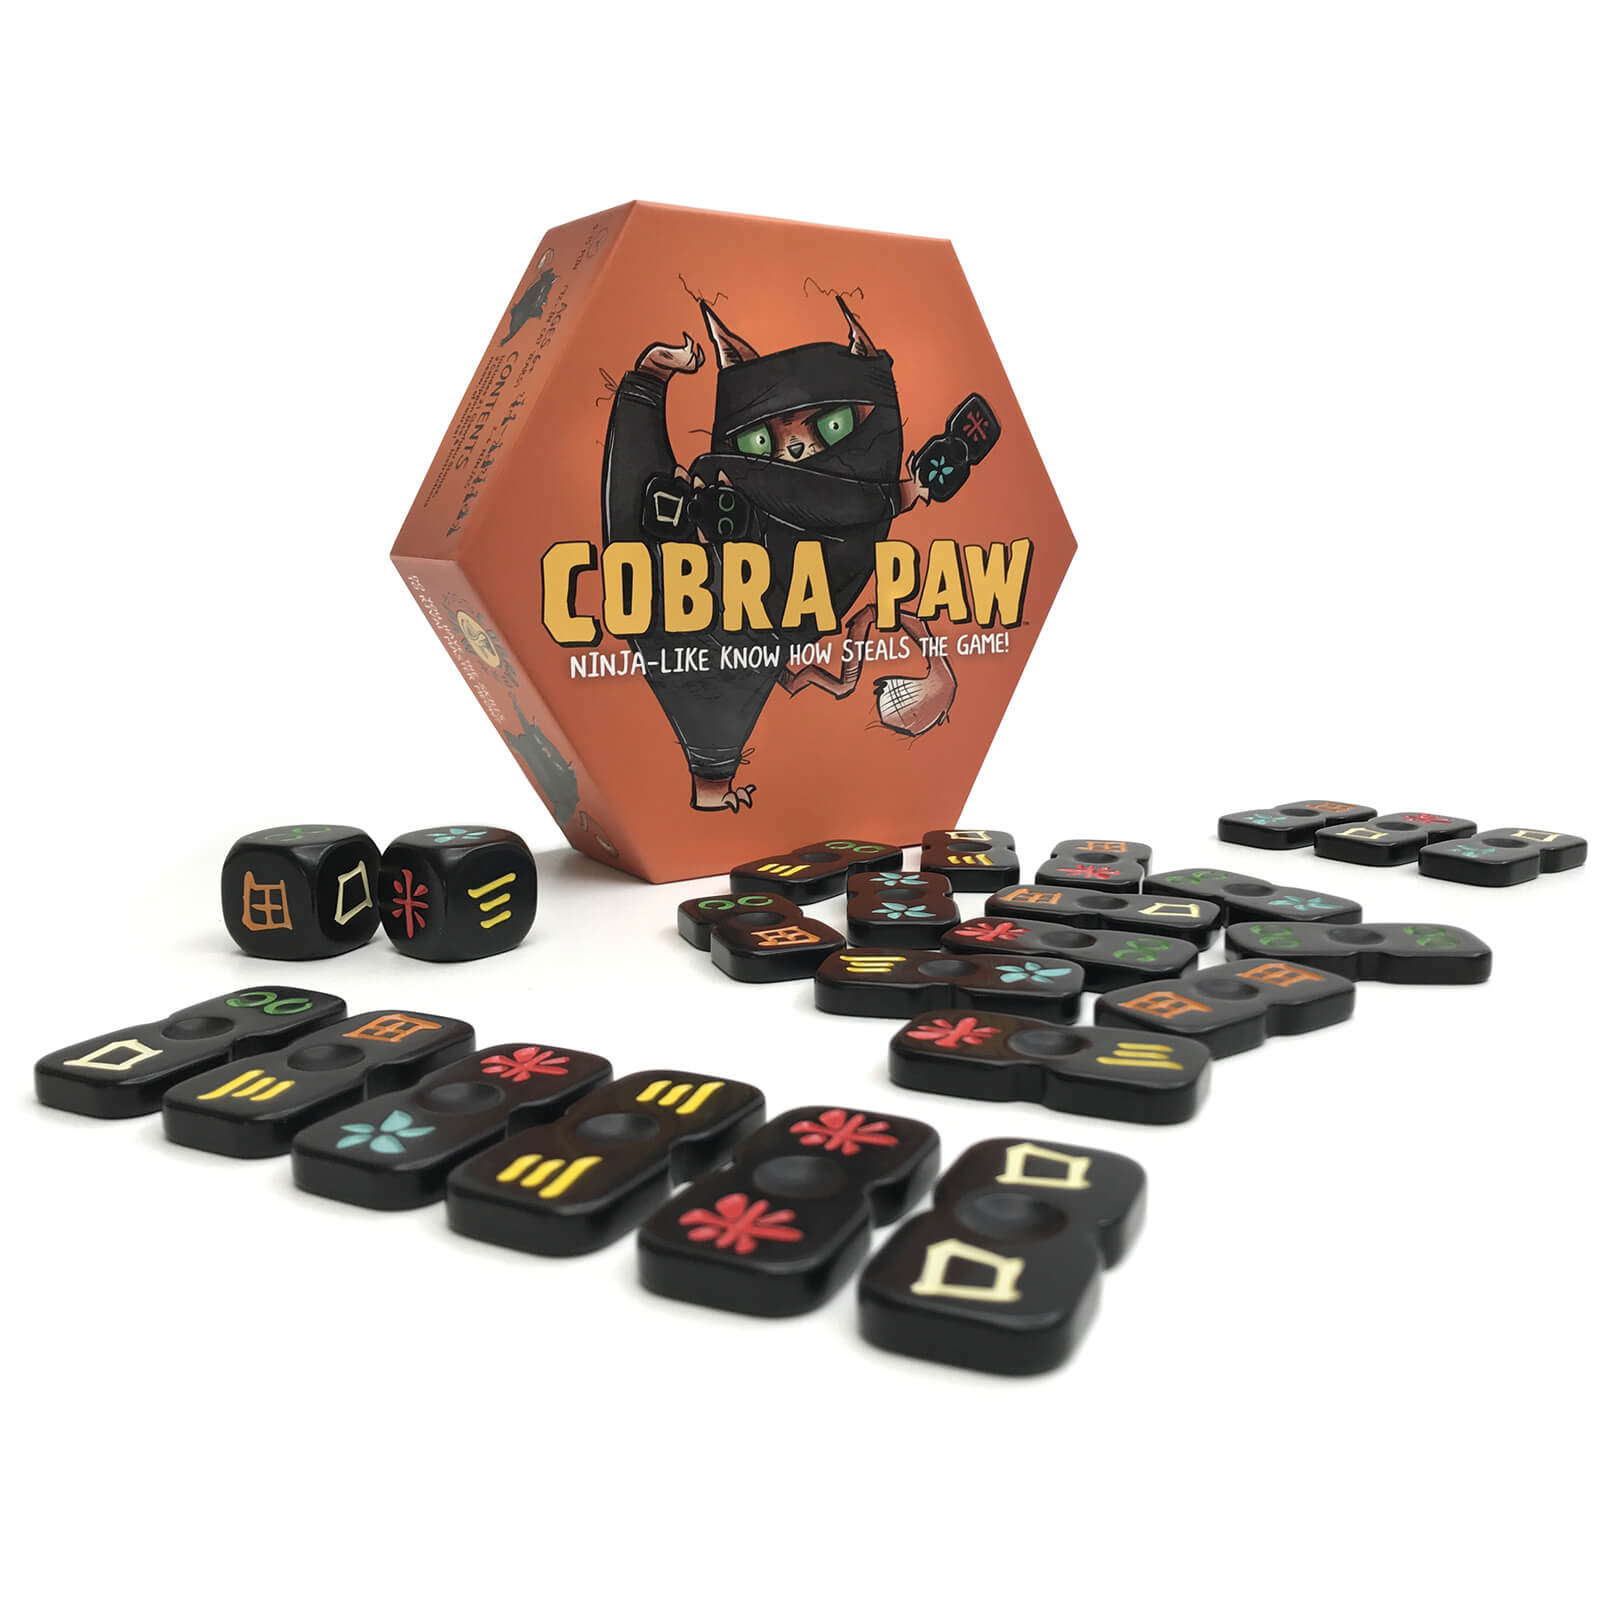 Cobra Paw Game